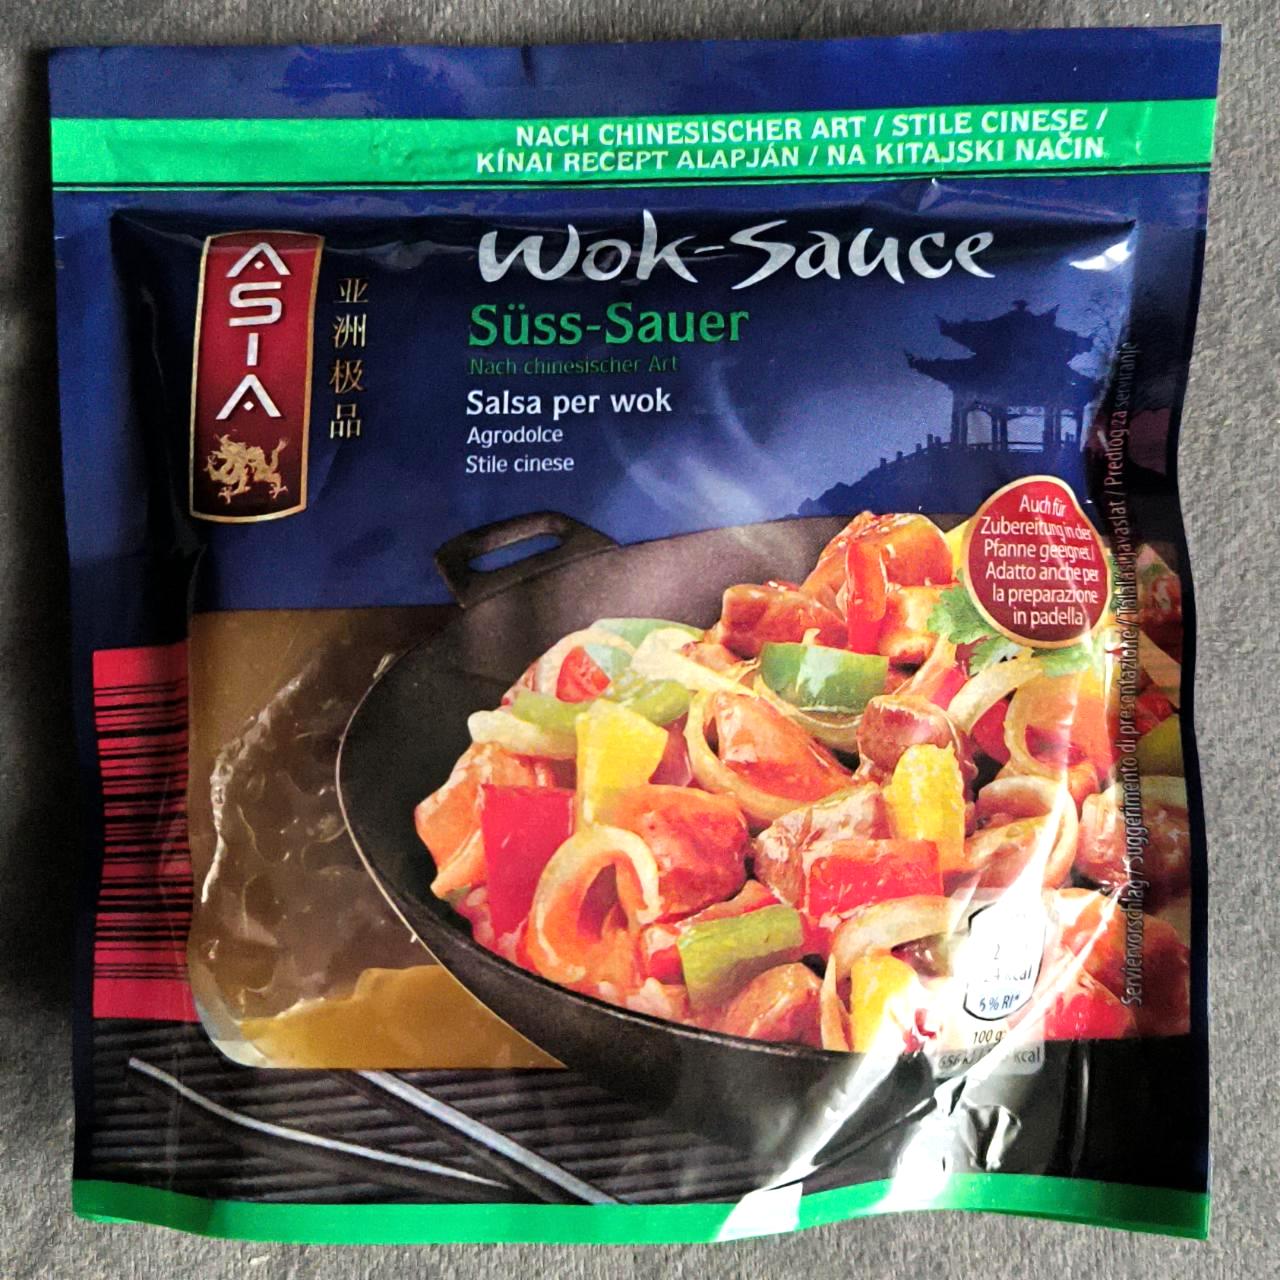 Képek - Wok-sauce süss-sauer Asia